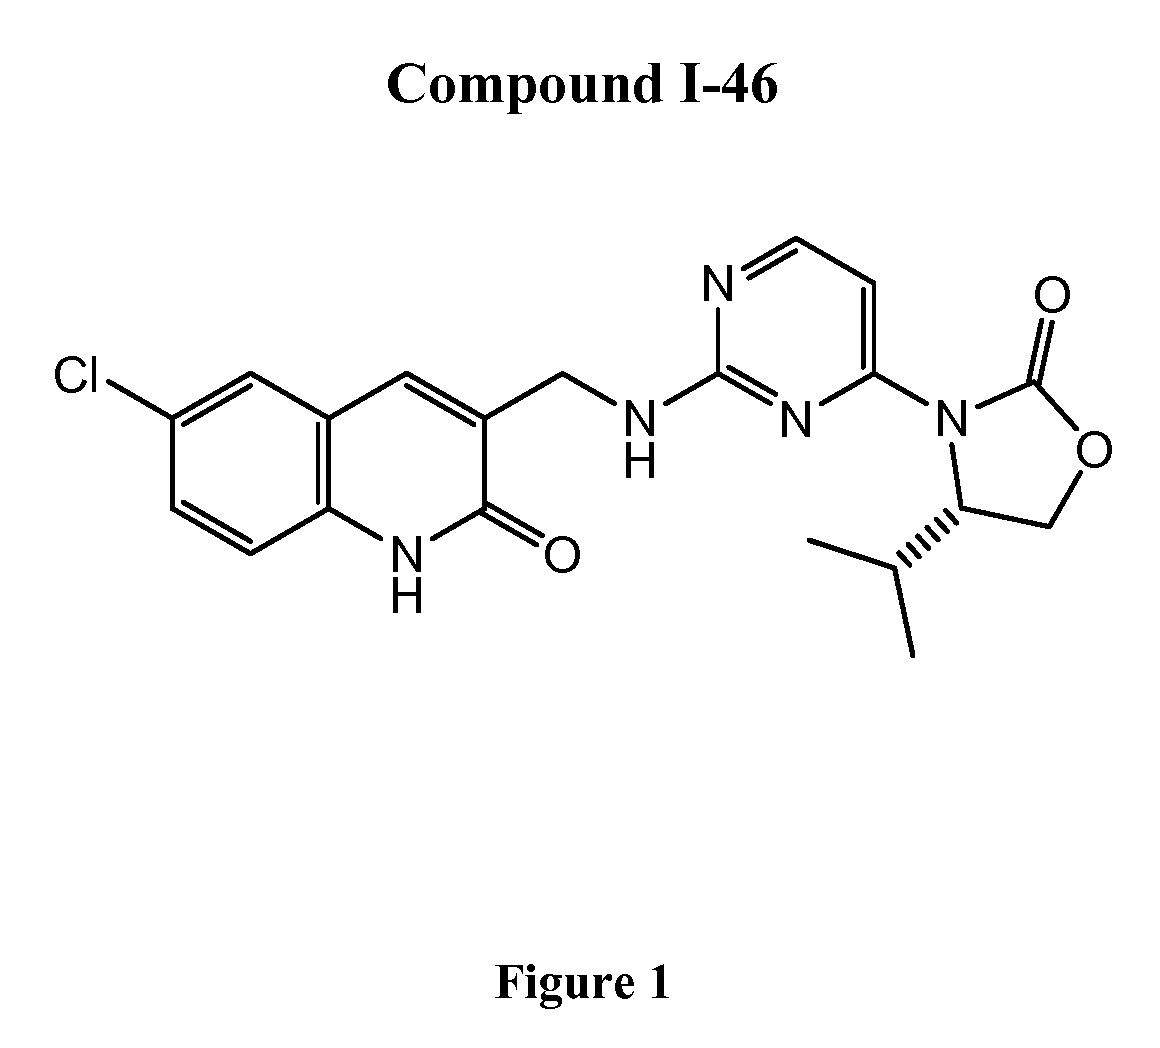 Quinolinone pyrimidines compositions as mutant-isocitrate dehydrogenase inhibitors